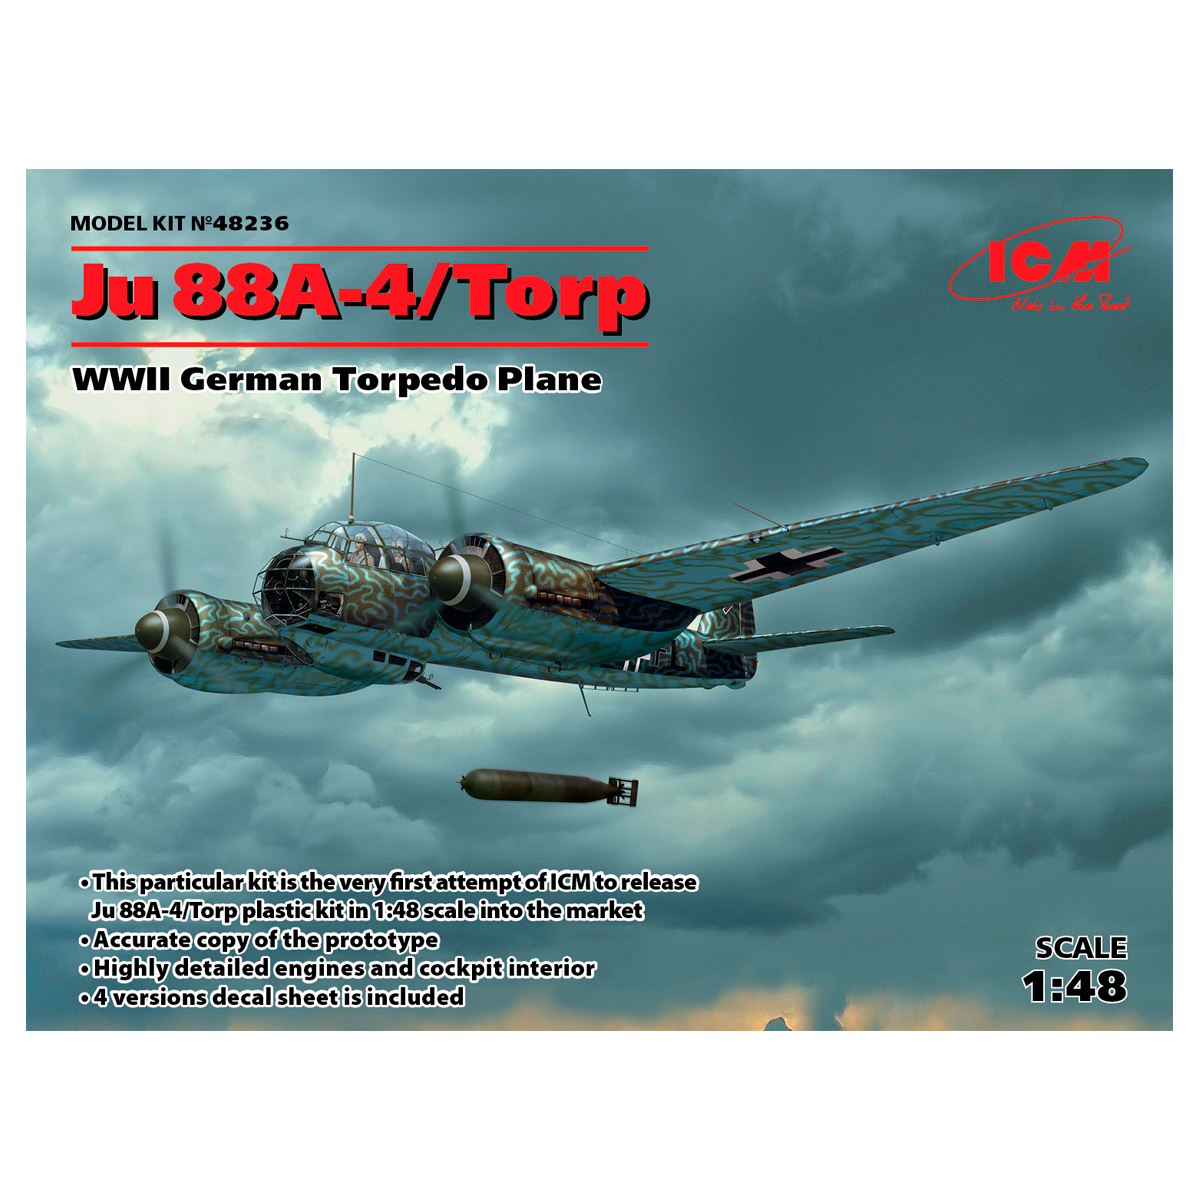 Ju 88A-4/Torp, WWII German Torpedo Plane 1/48